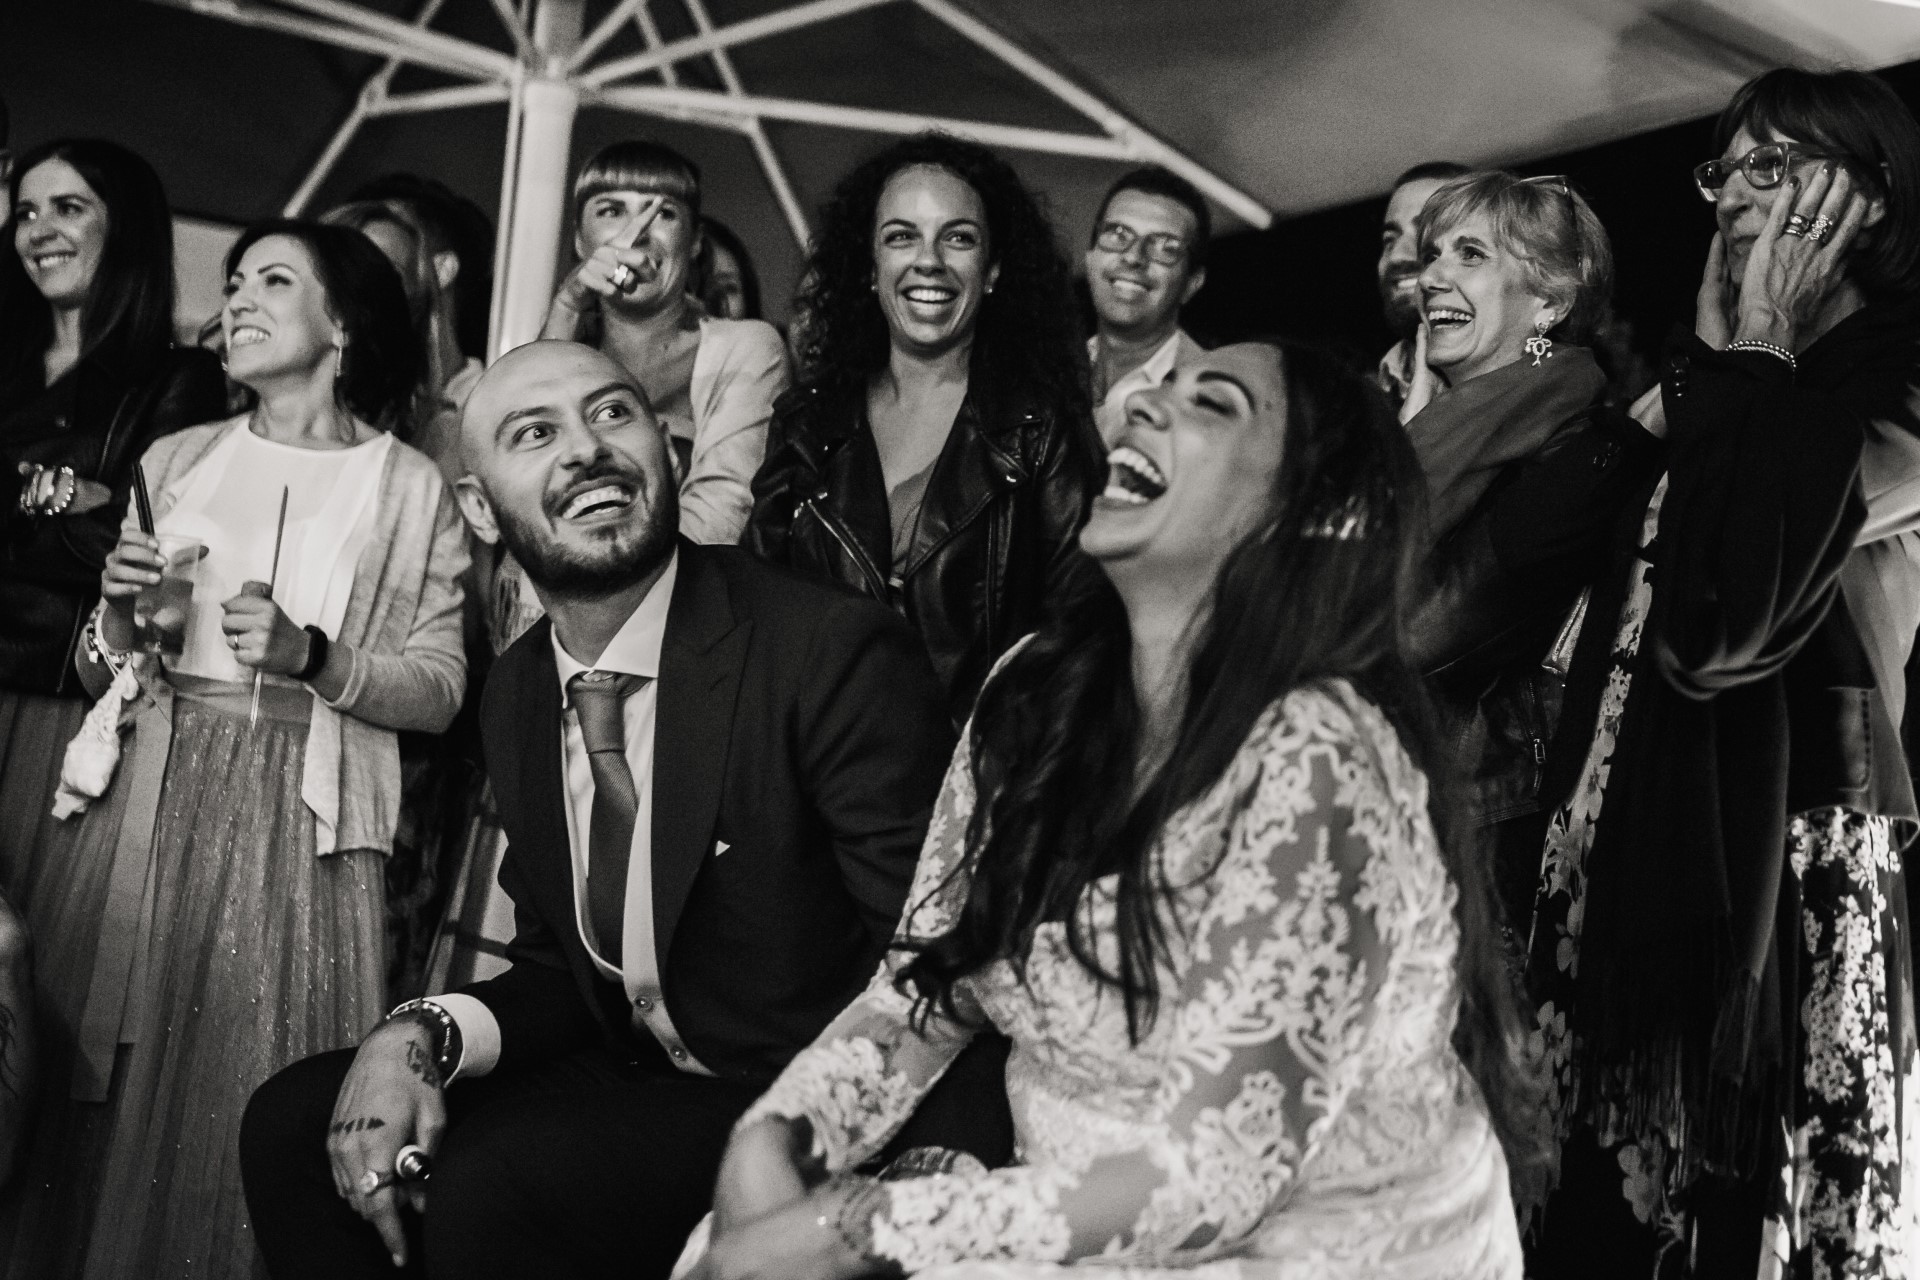 Augusta&Filo fotografo matrimonio destination wedding photographer videographer luxury reportage italia italy como lake amalfi coast apulia rome roma sicily masseria potenti tuscany